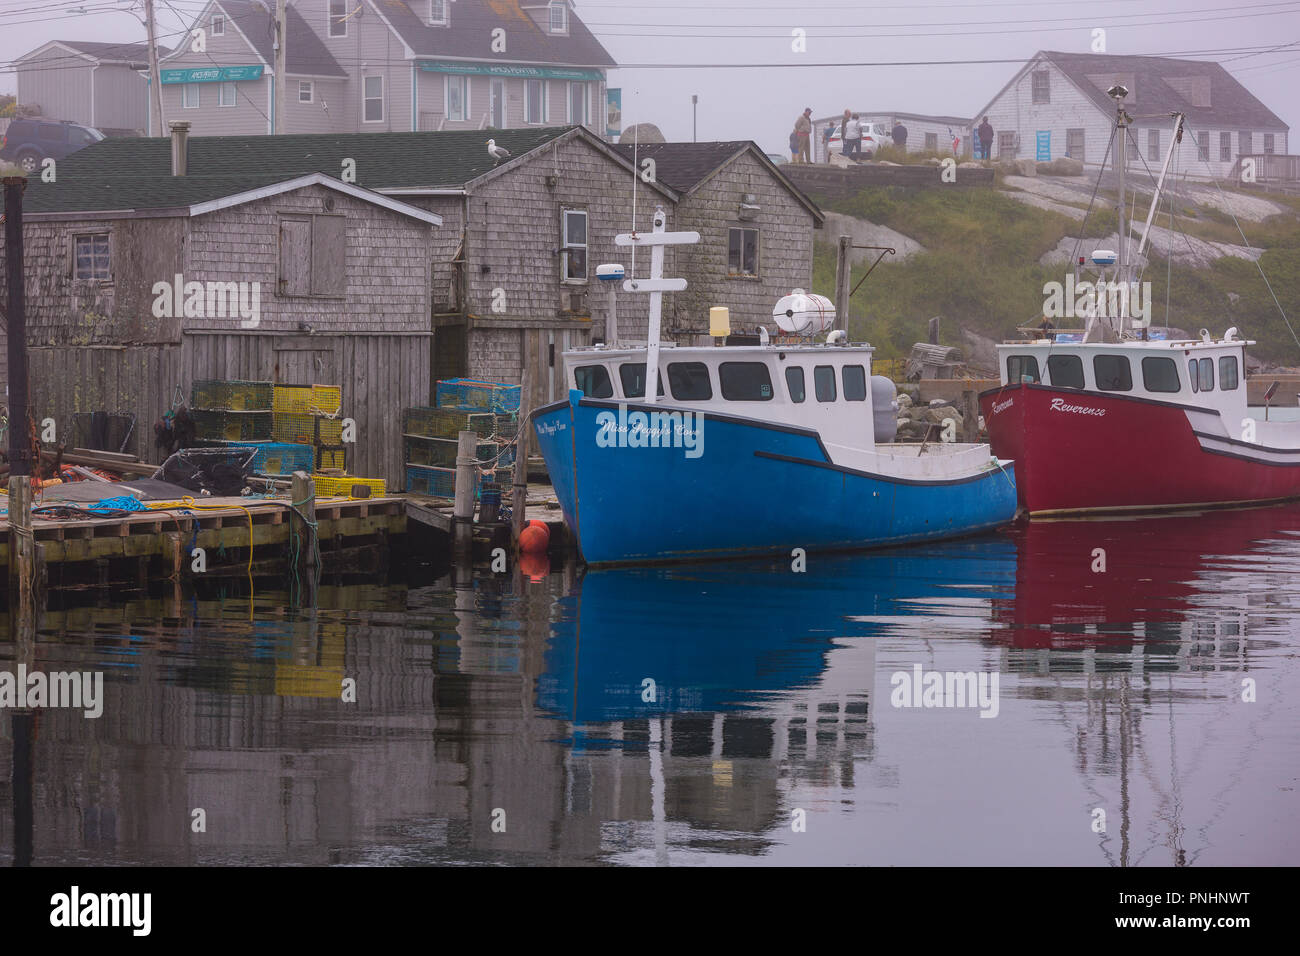 PEGGY'S COVE, NOVA SCOTIA, CANADA - Boats docked in fishing village harbor. Stock Photo